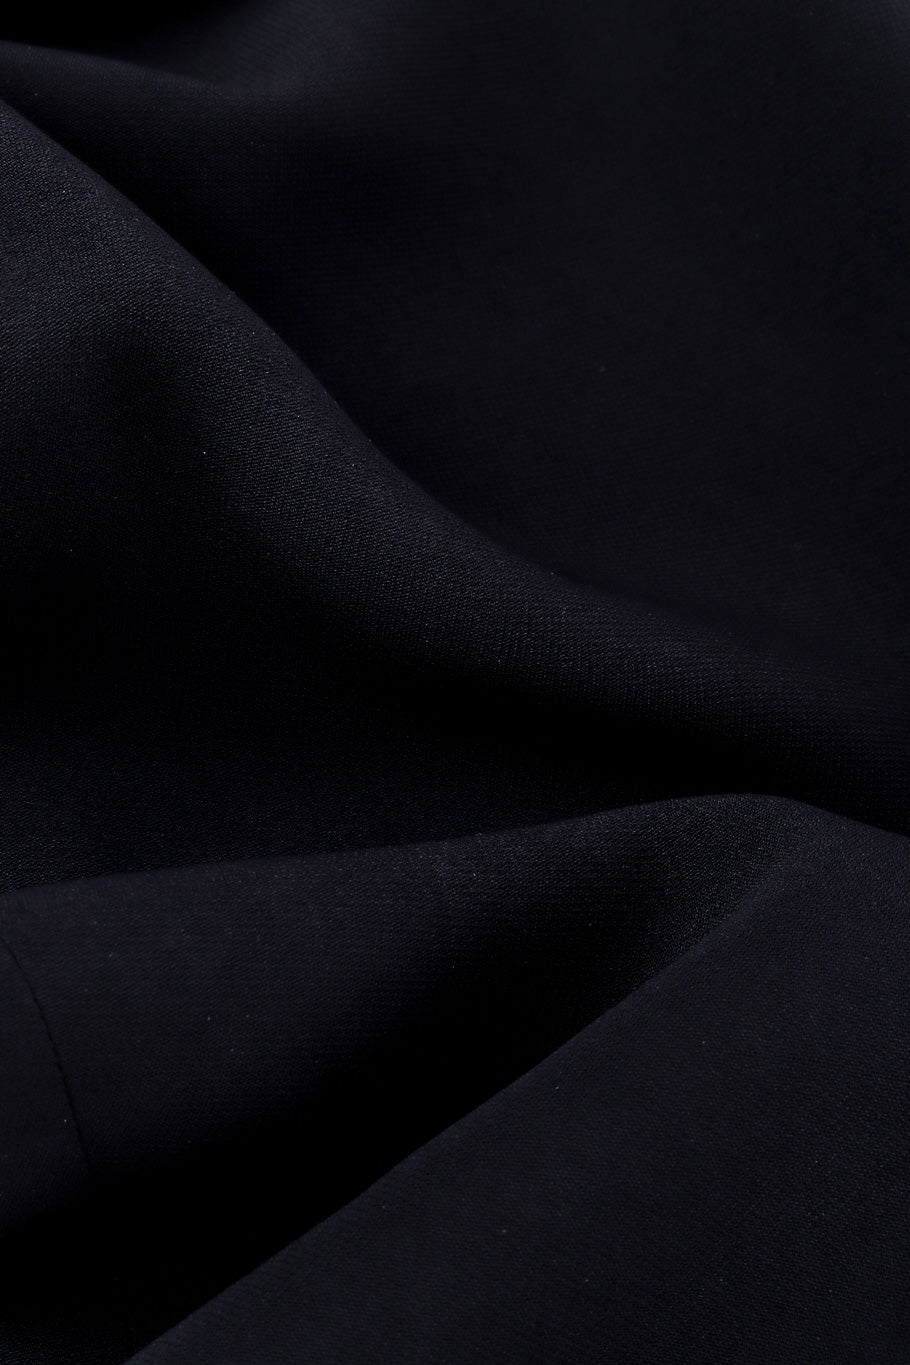 Versace Asymmetric Cut-Out Dress fabric closeup @Recessla